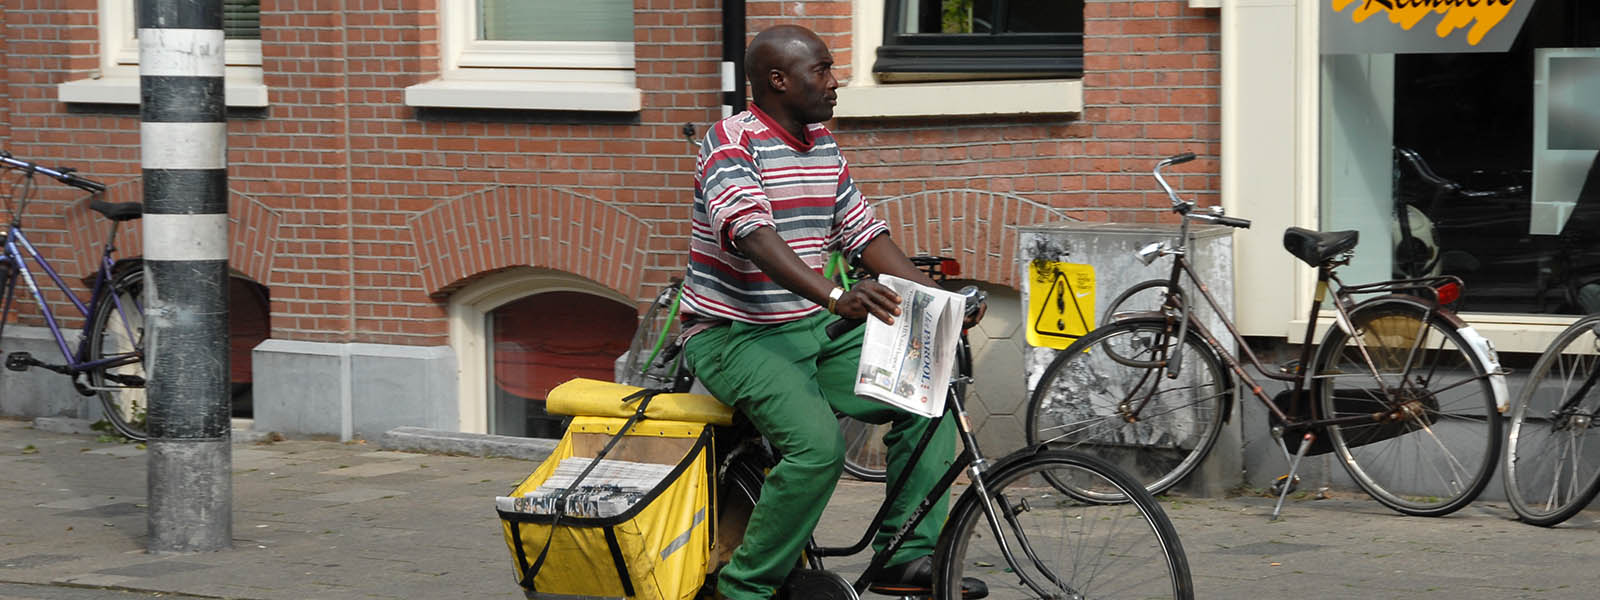 Krantenbezorger op de fiets in Amsterdam